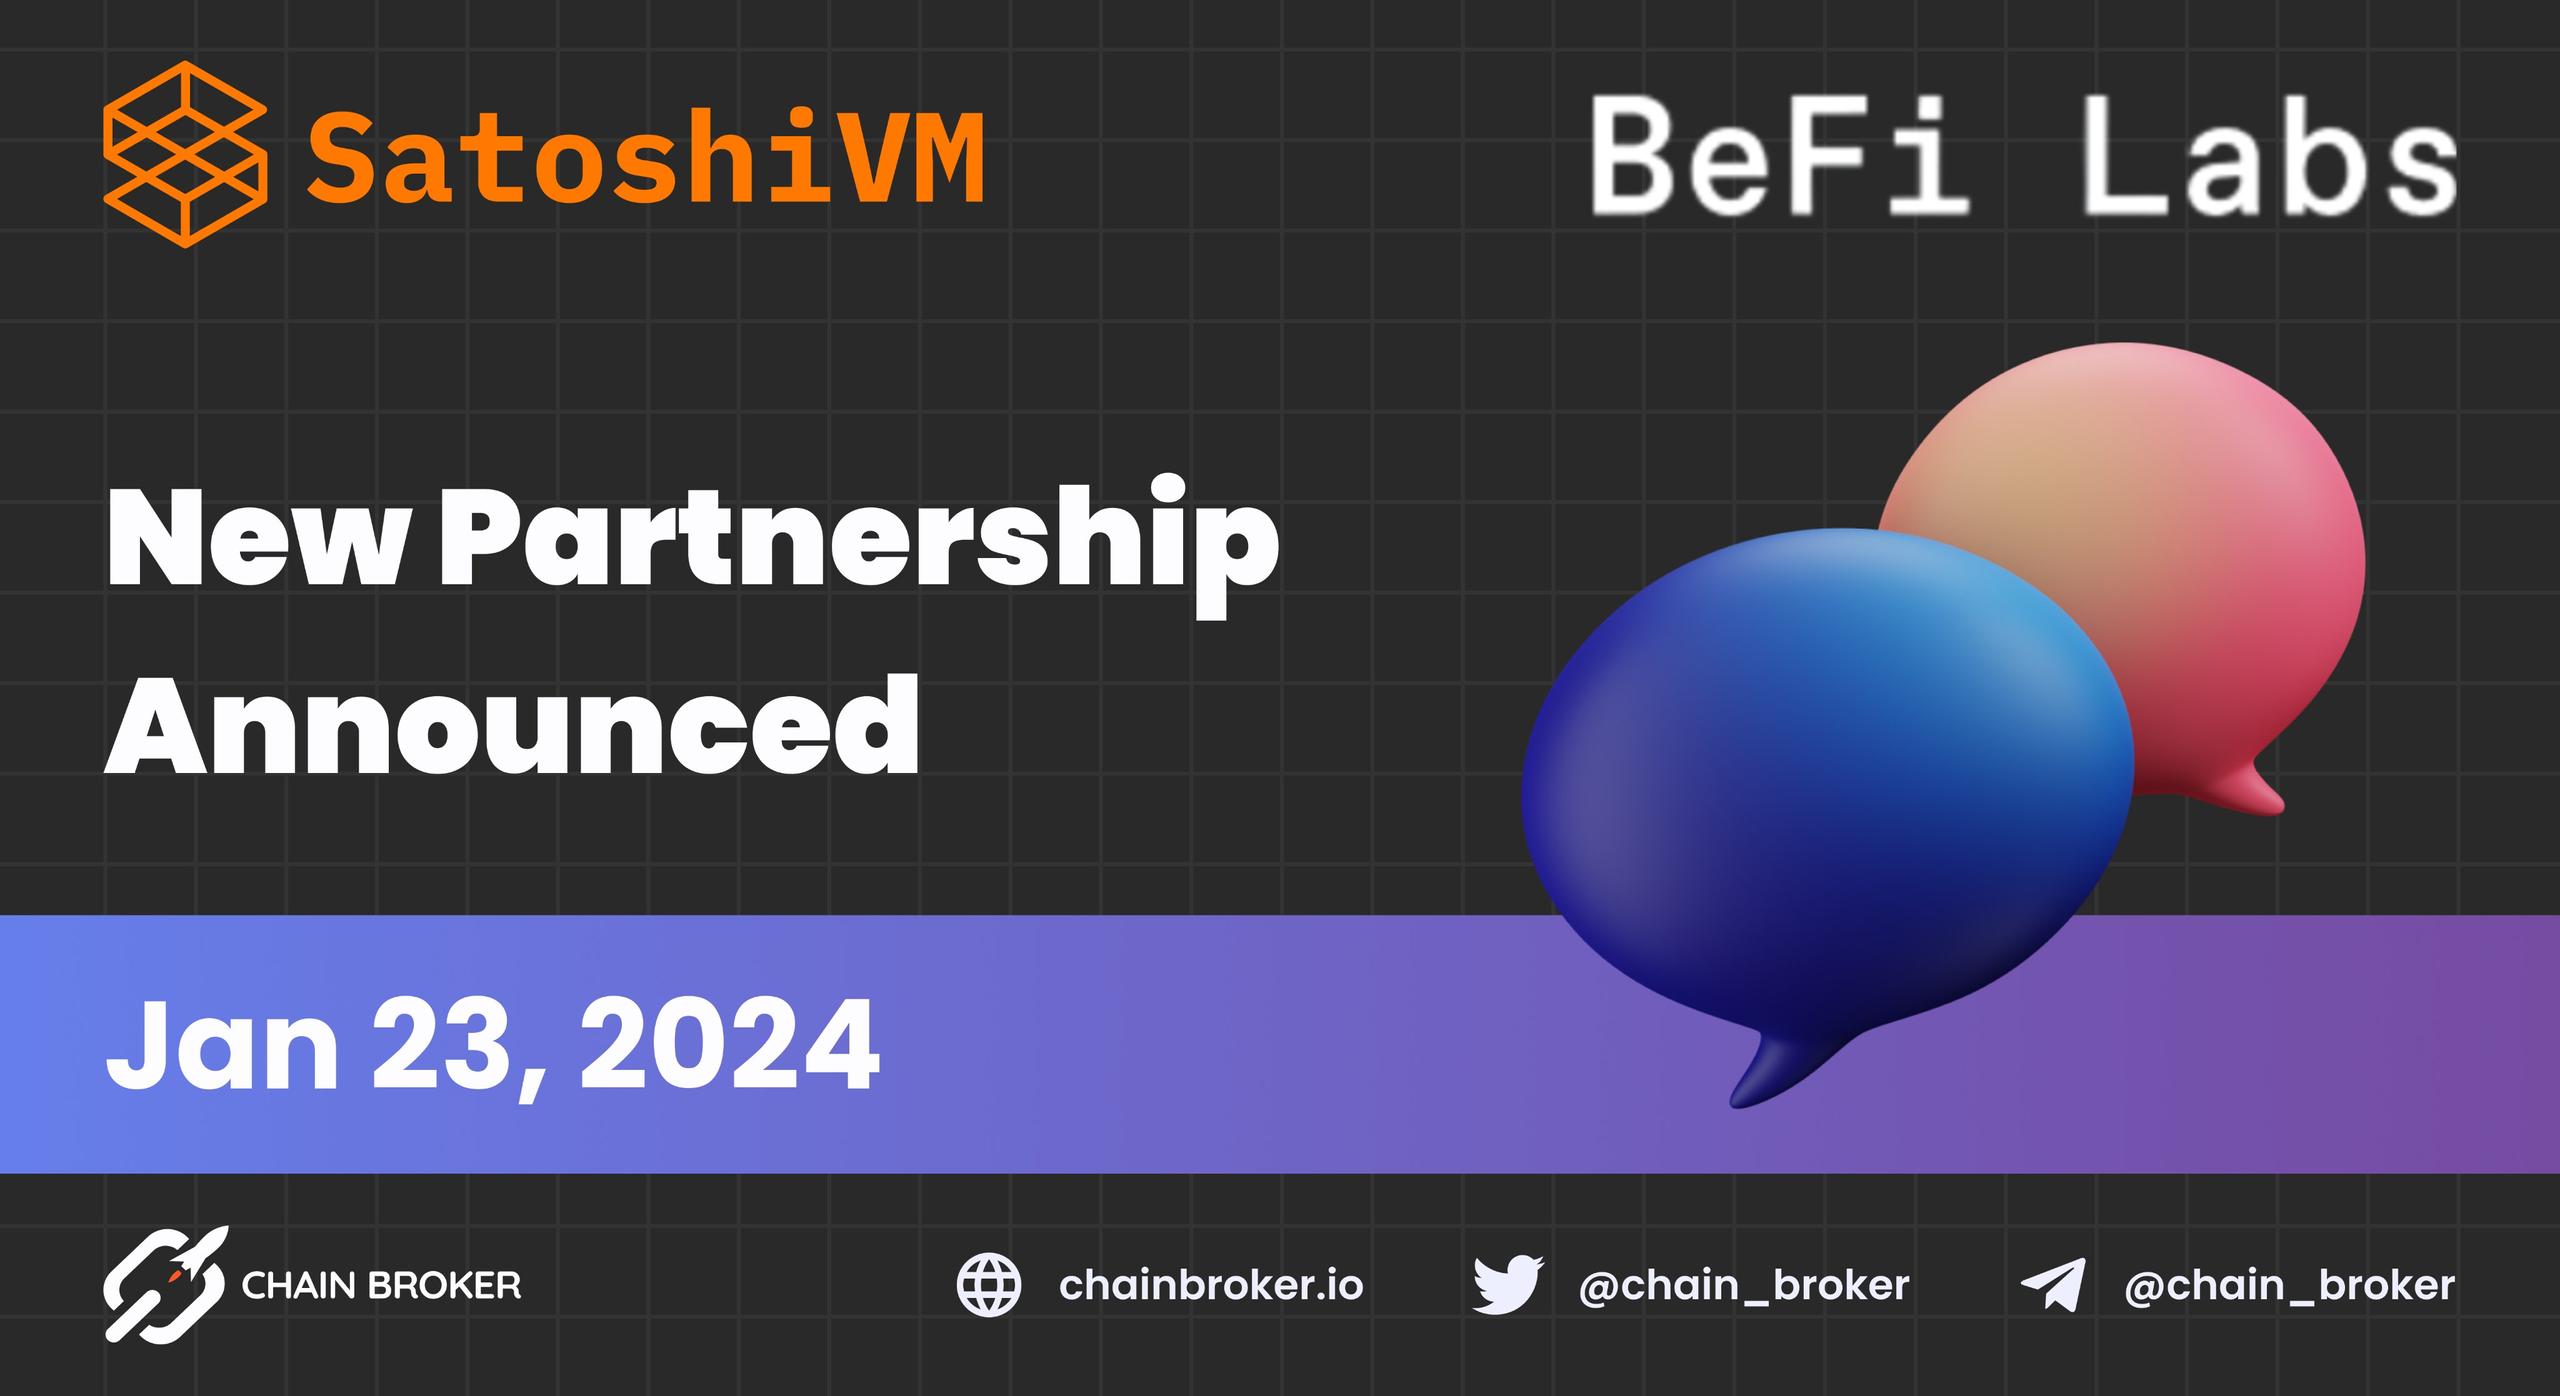 SatoshiVM and Befi Labs announce a deep partnership